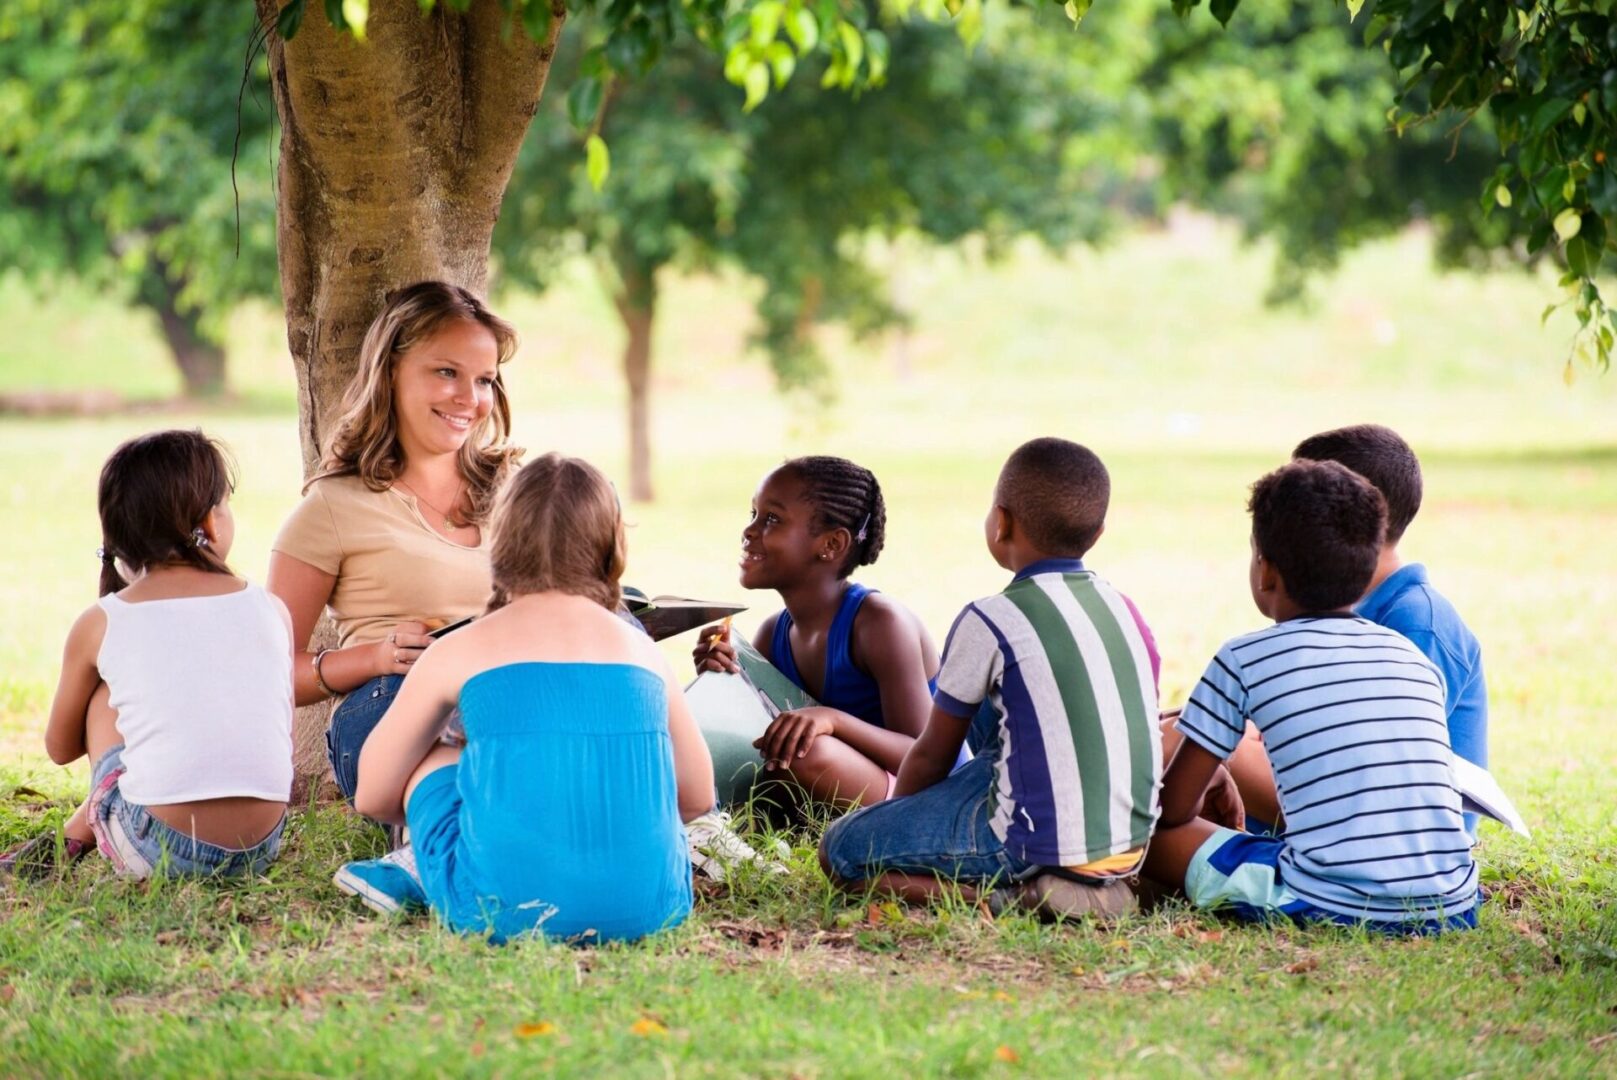 a woman is teaching kids under a tree